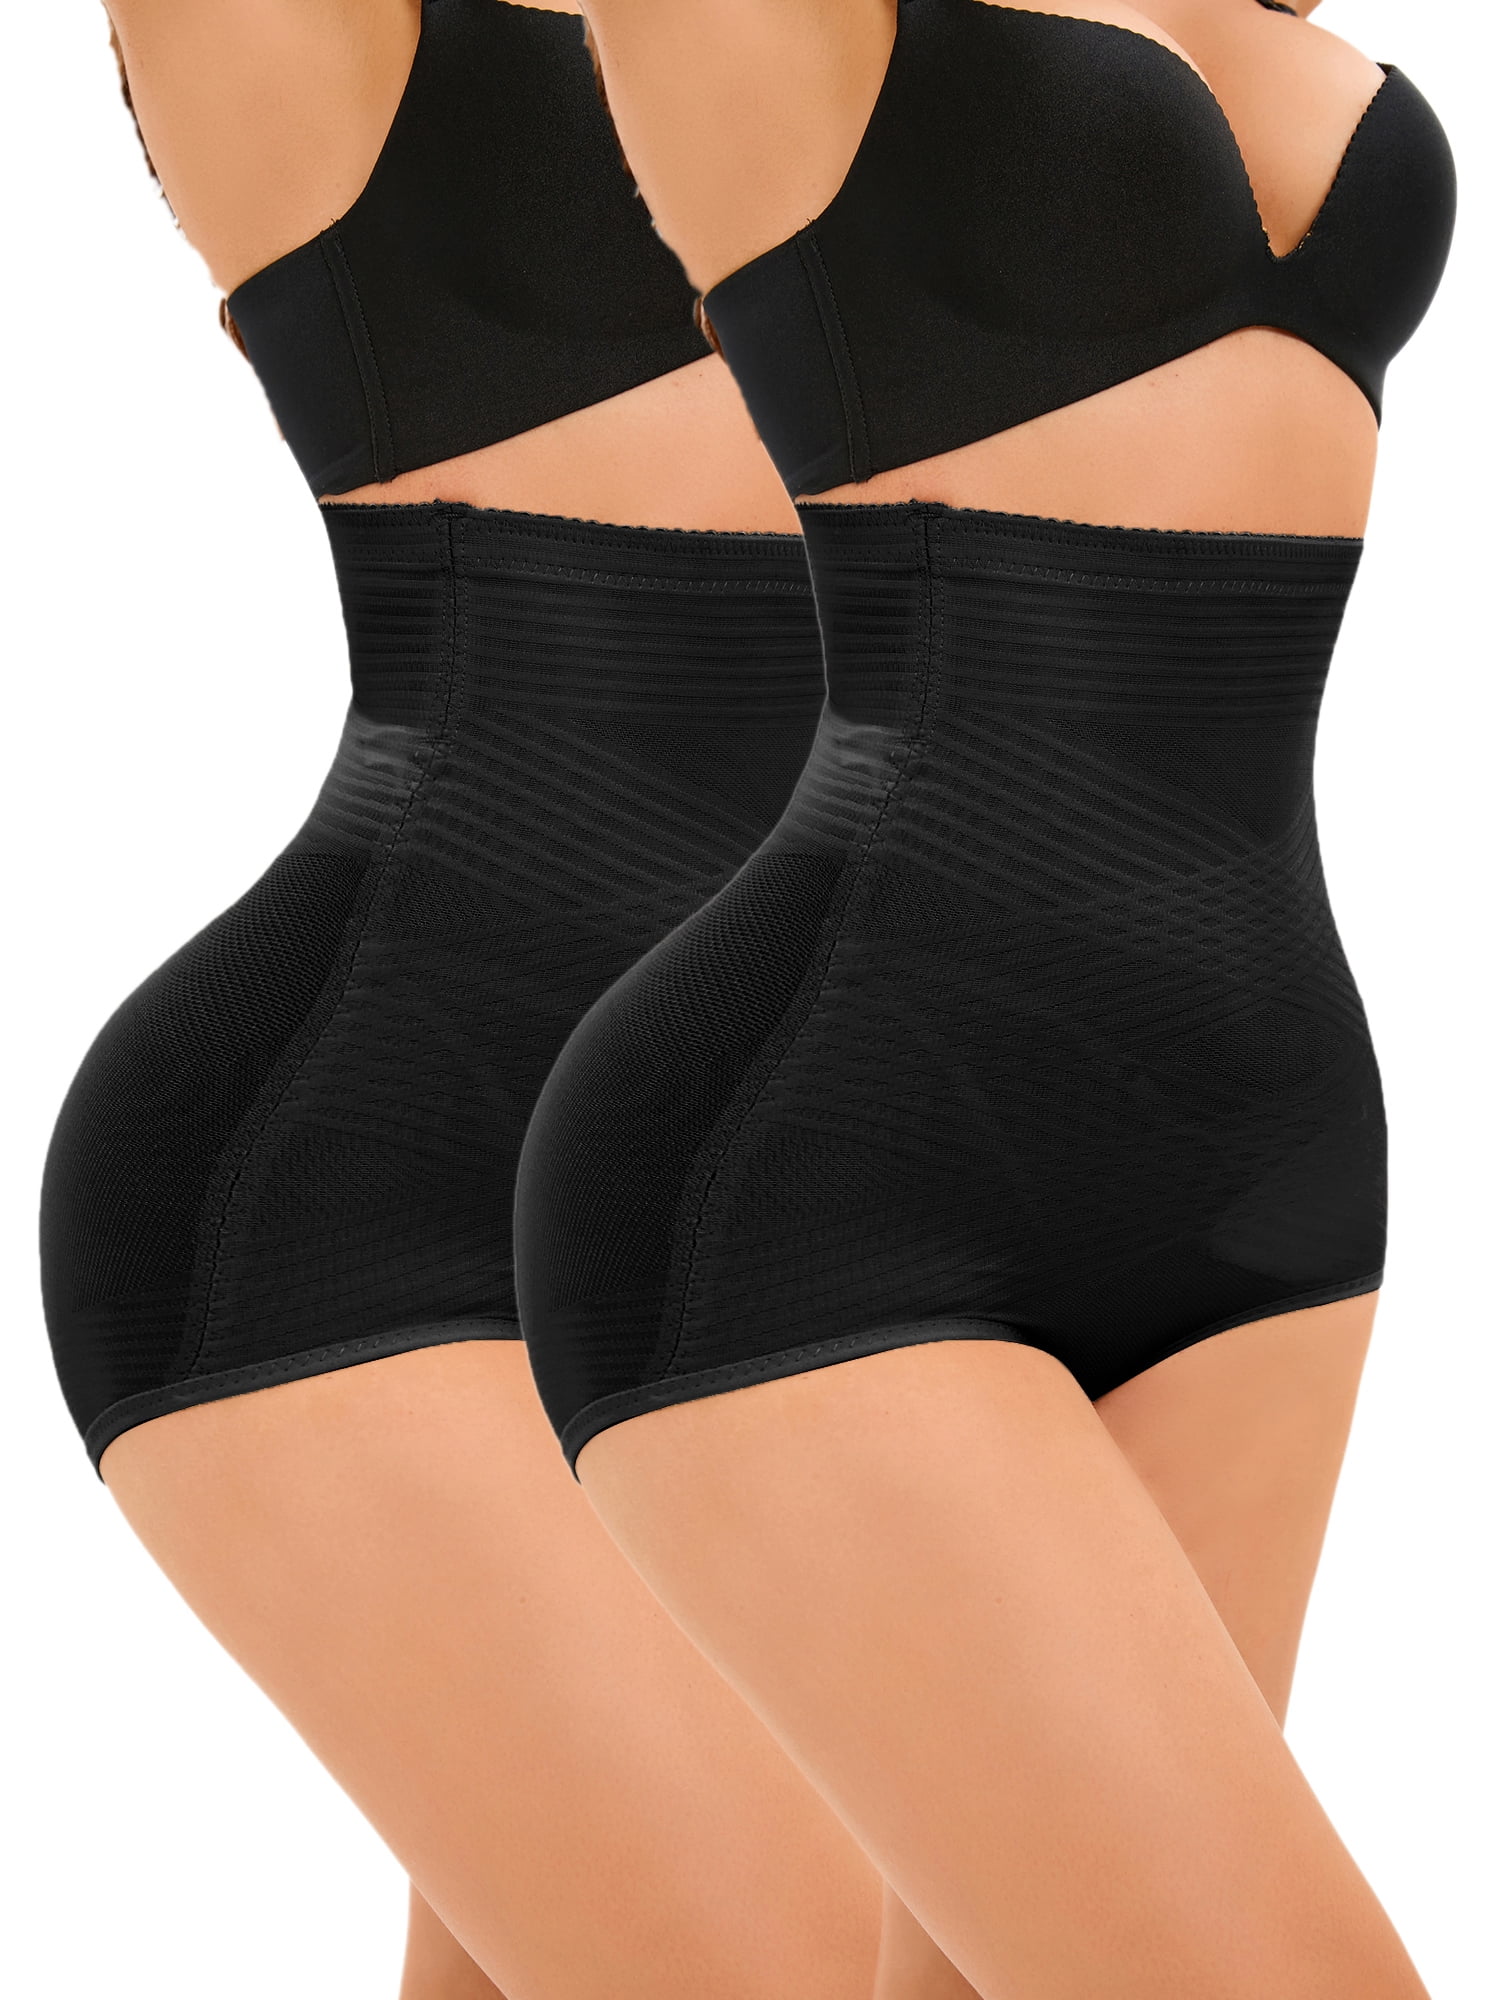 LELINTA Women's 2 Pack Shapewear Butt Enhancer - for Bum Butt Push Up Panty  Underwear Comfortable Body Shaper Hips Enhancer Tummy Control Panties/Beige,Black  